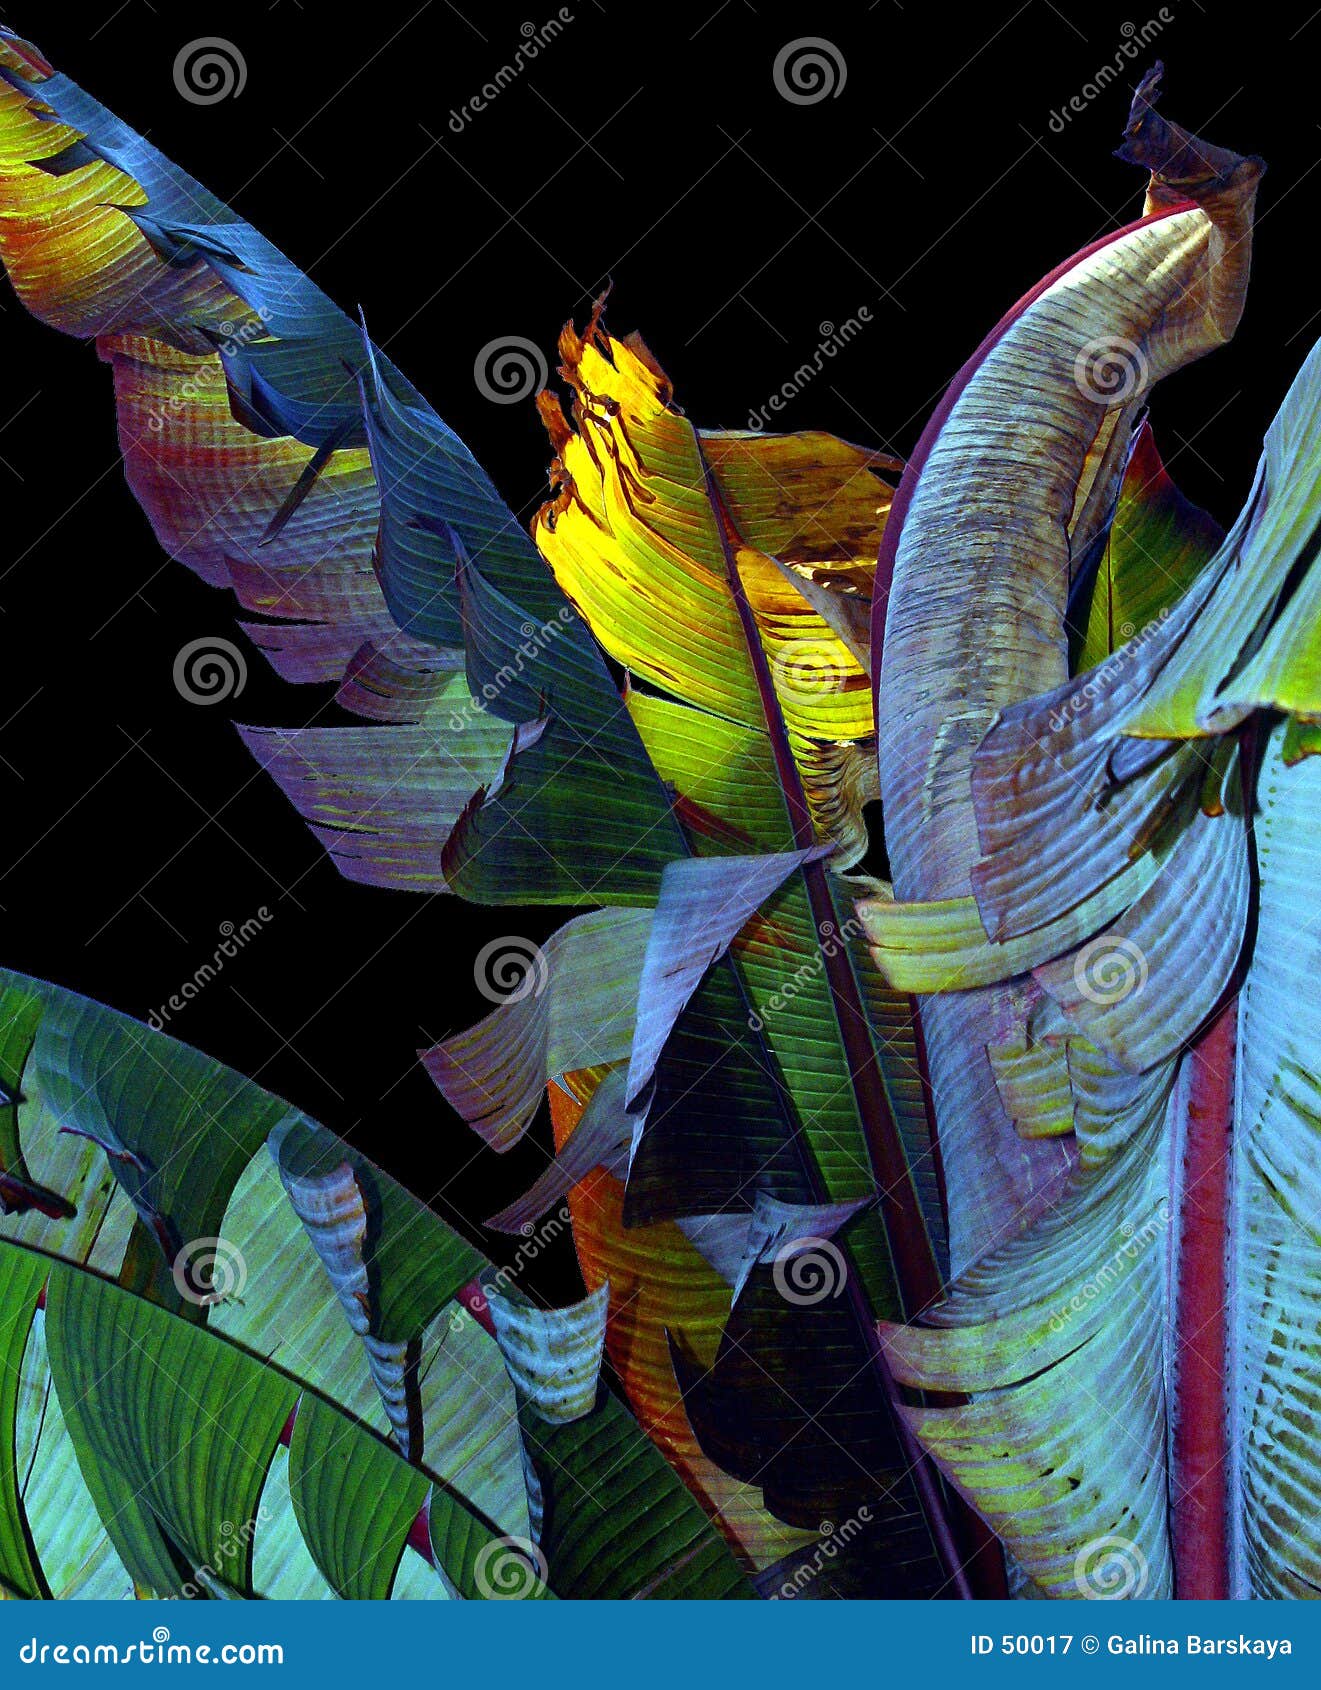 high quality banana leaf wallpaper